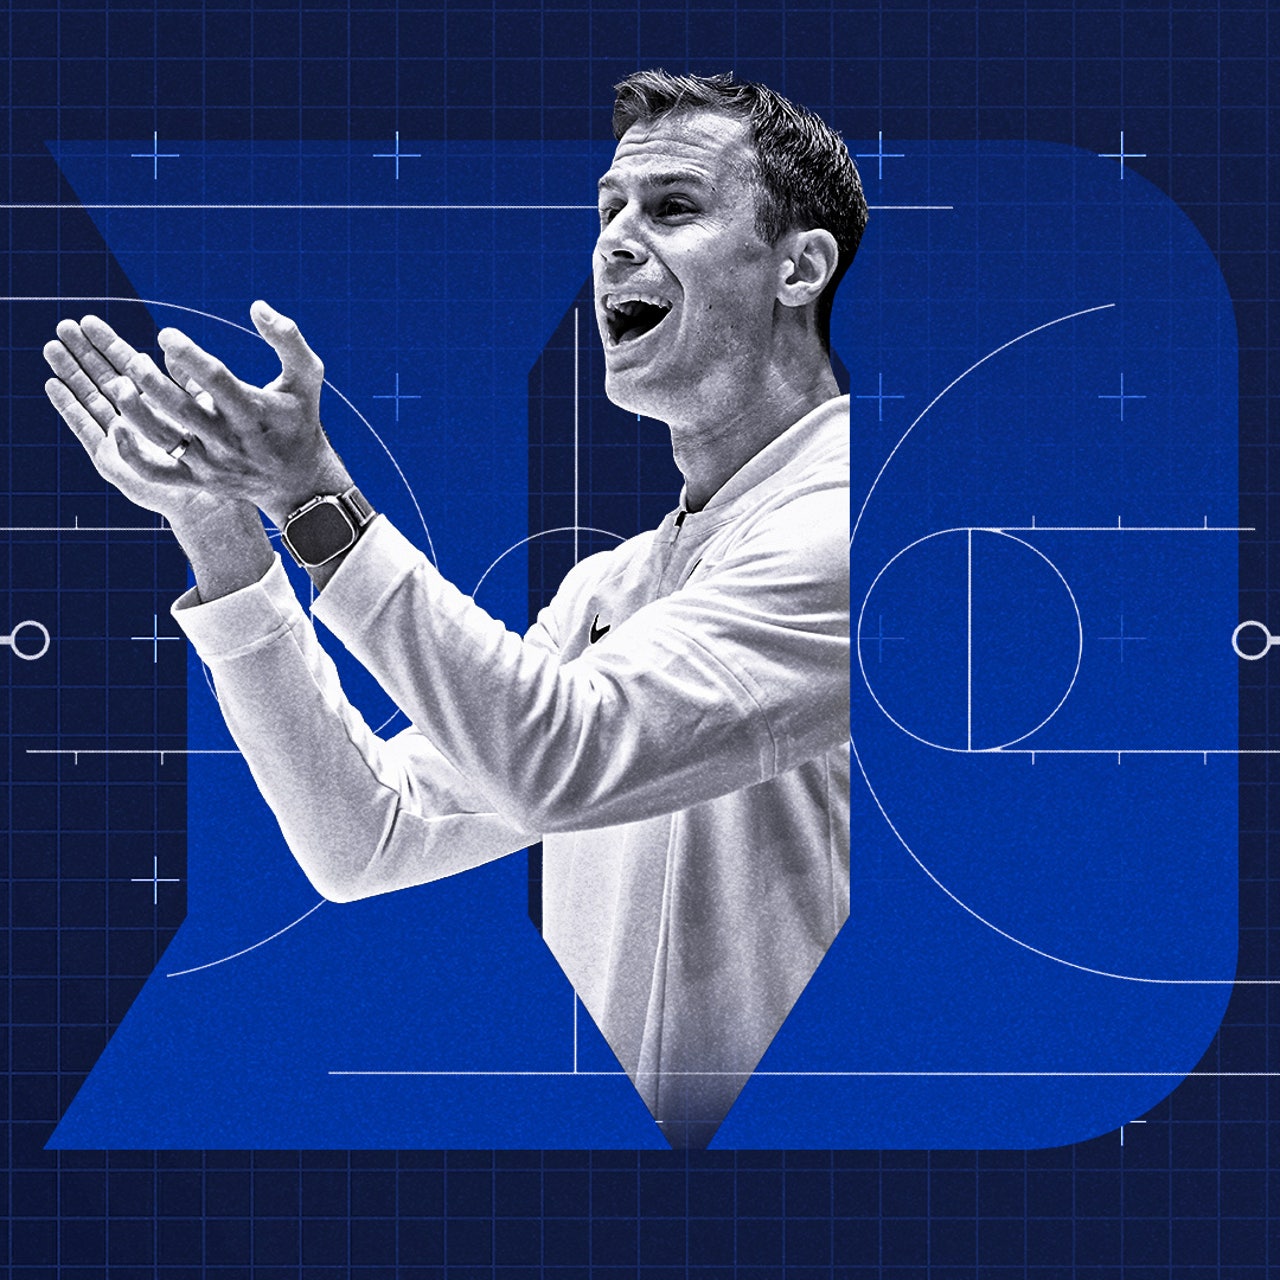 How Jon Scheyer's Duke career could impact him as head coach